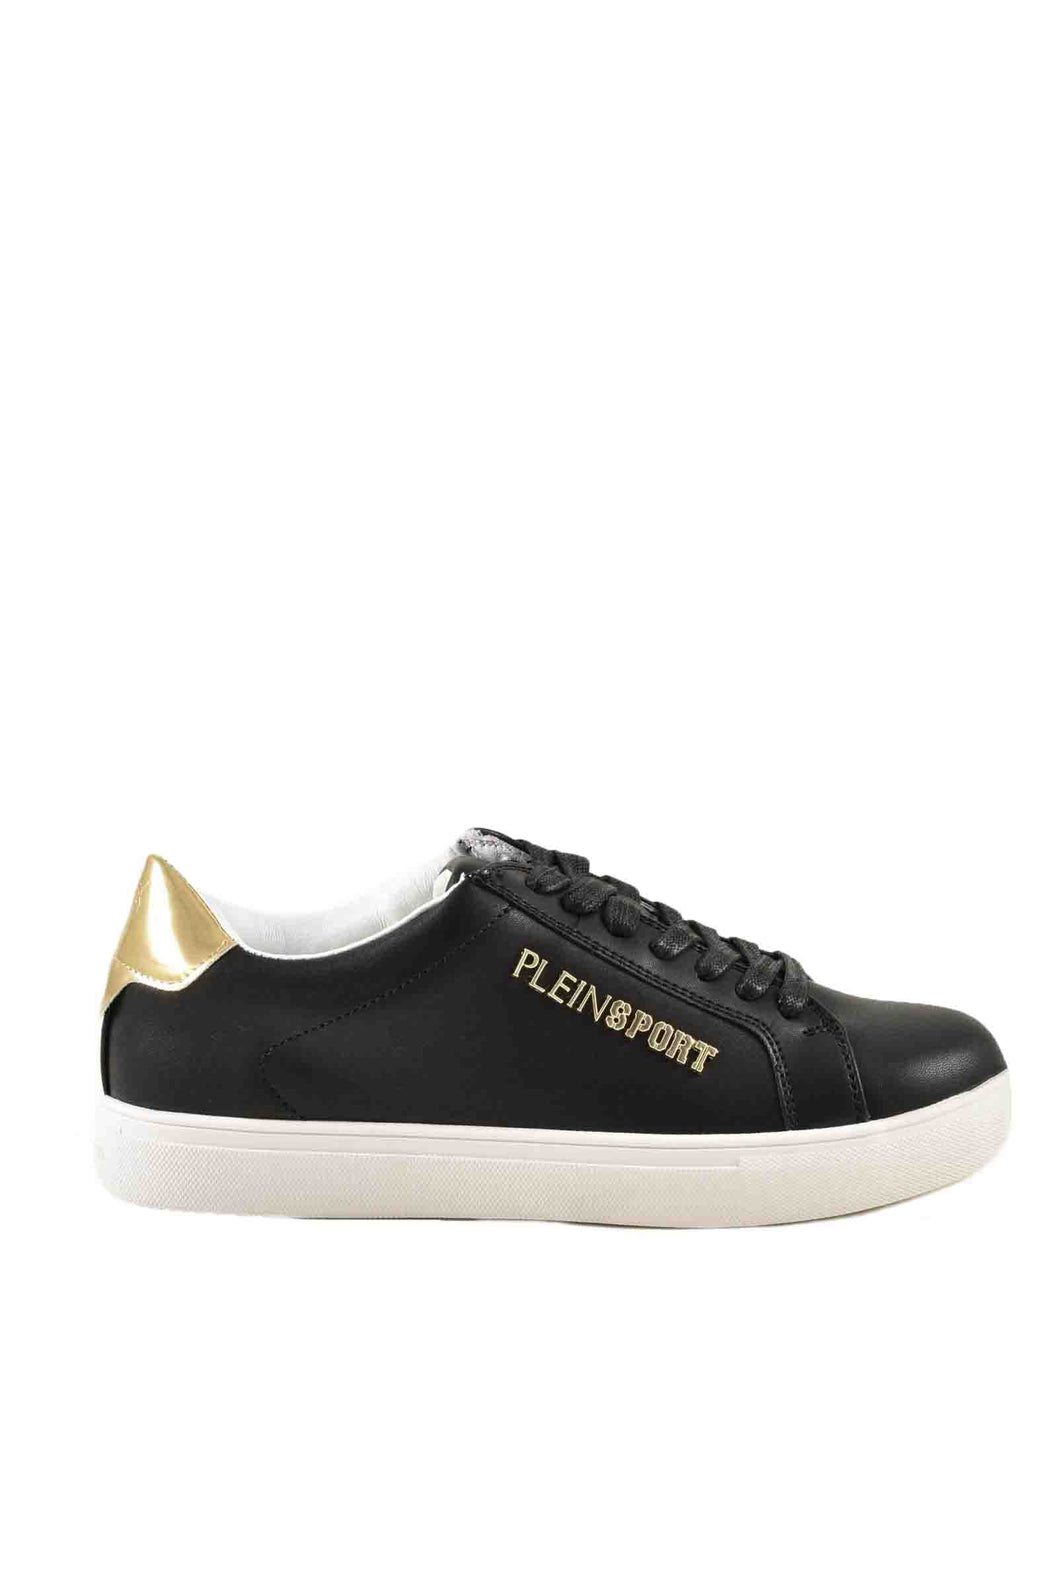 Plein Sport DISP709 Women's Sneakers Black with Gold Logo